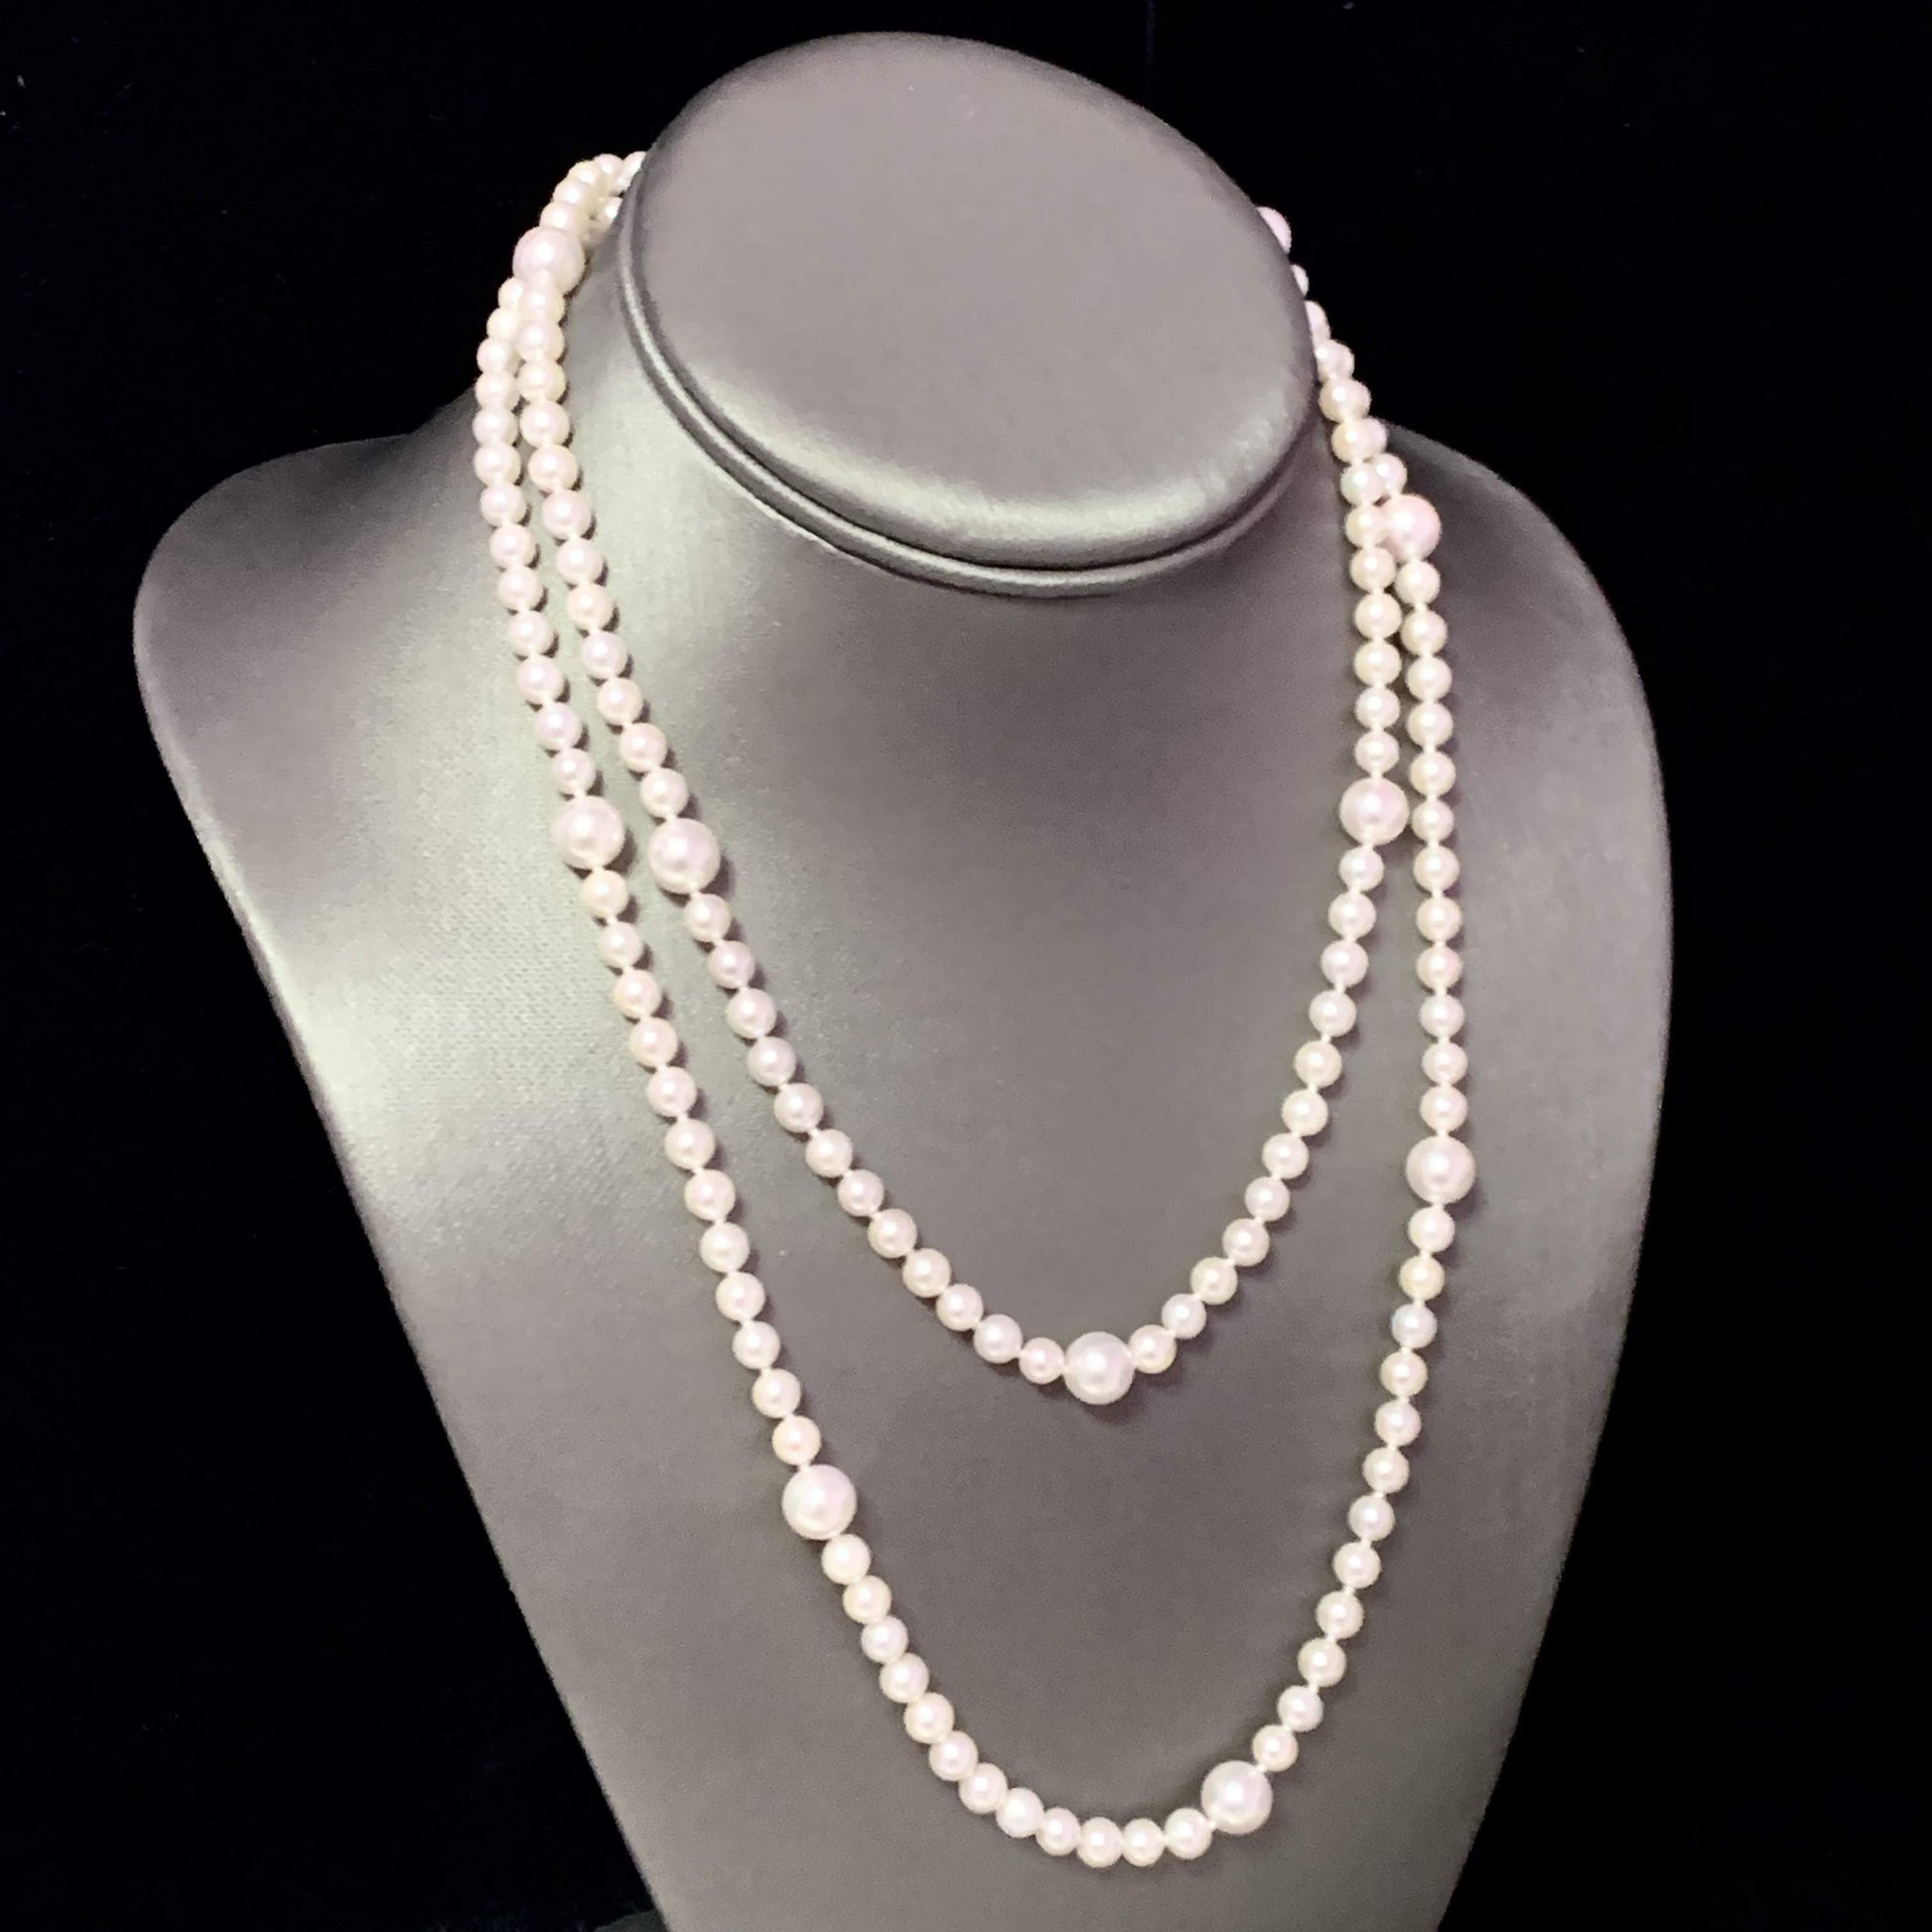 Akoya Pearl Necklace 14k Yellow Gold 37.25" 8.5 mm Certified $5,950 114457 - Certified Fine Jewelry